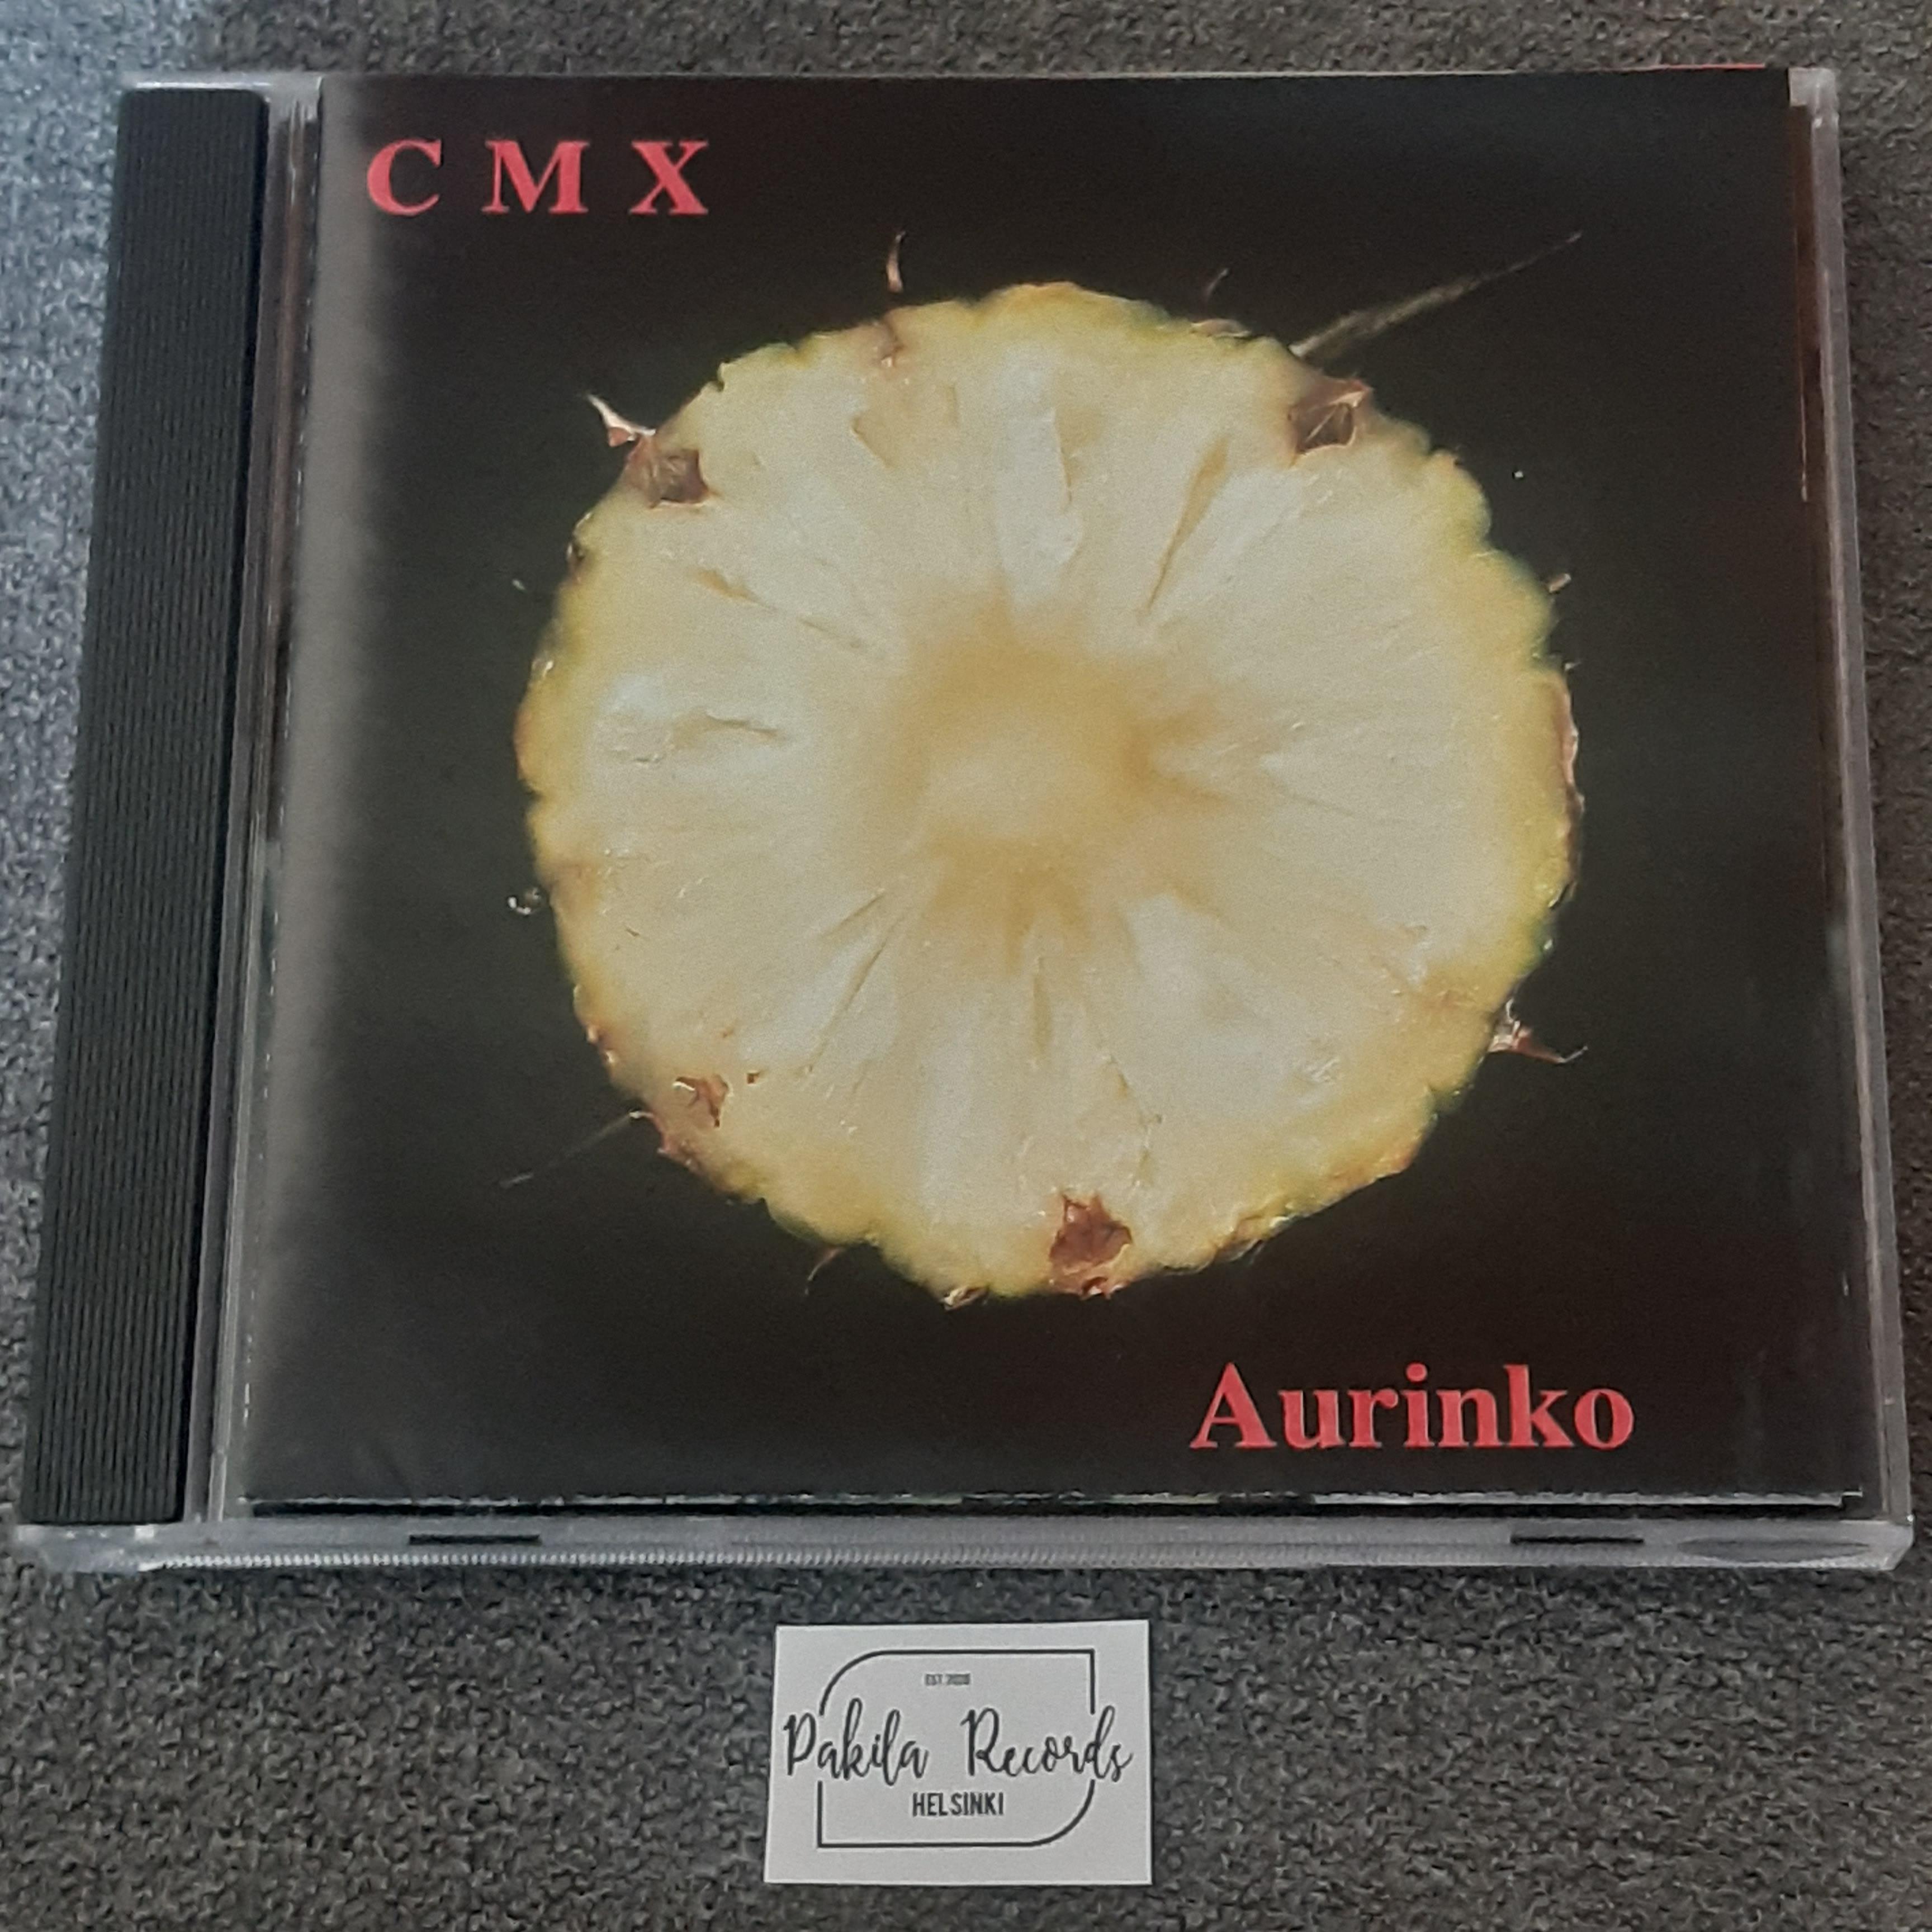 CMX - Aurinko - CD (käytetty)